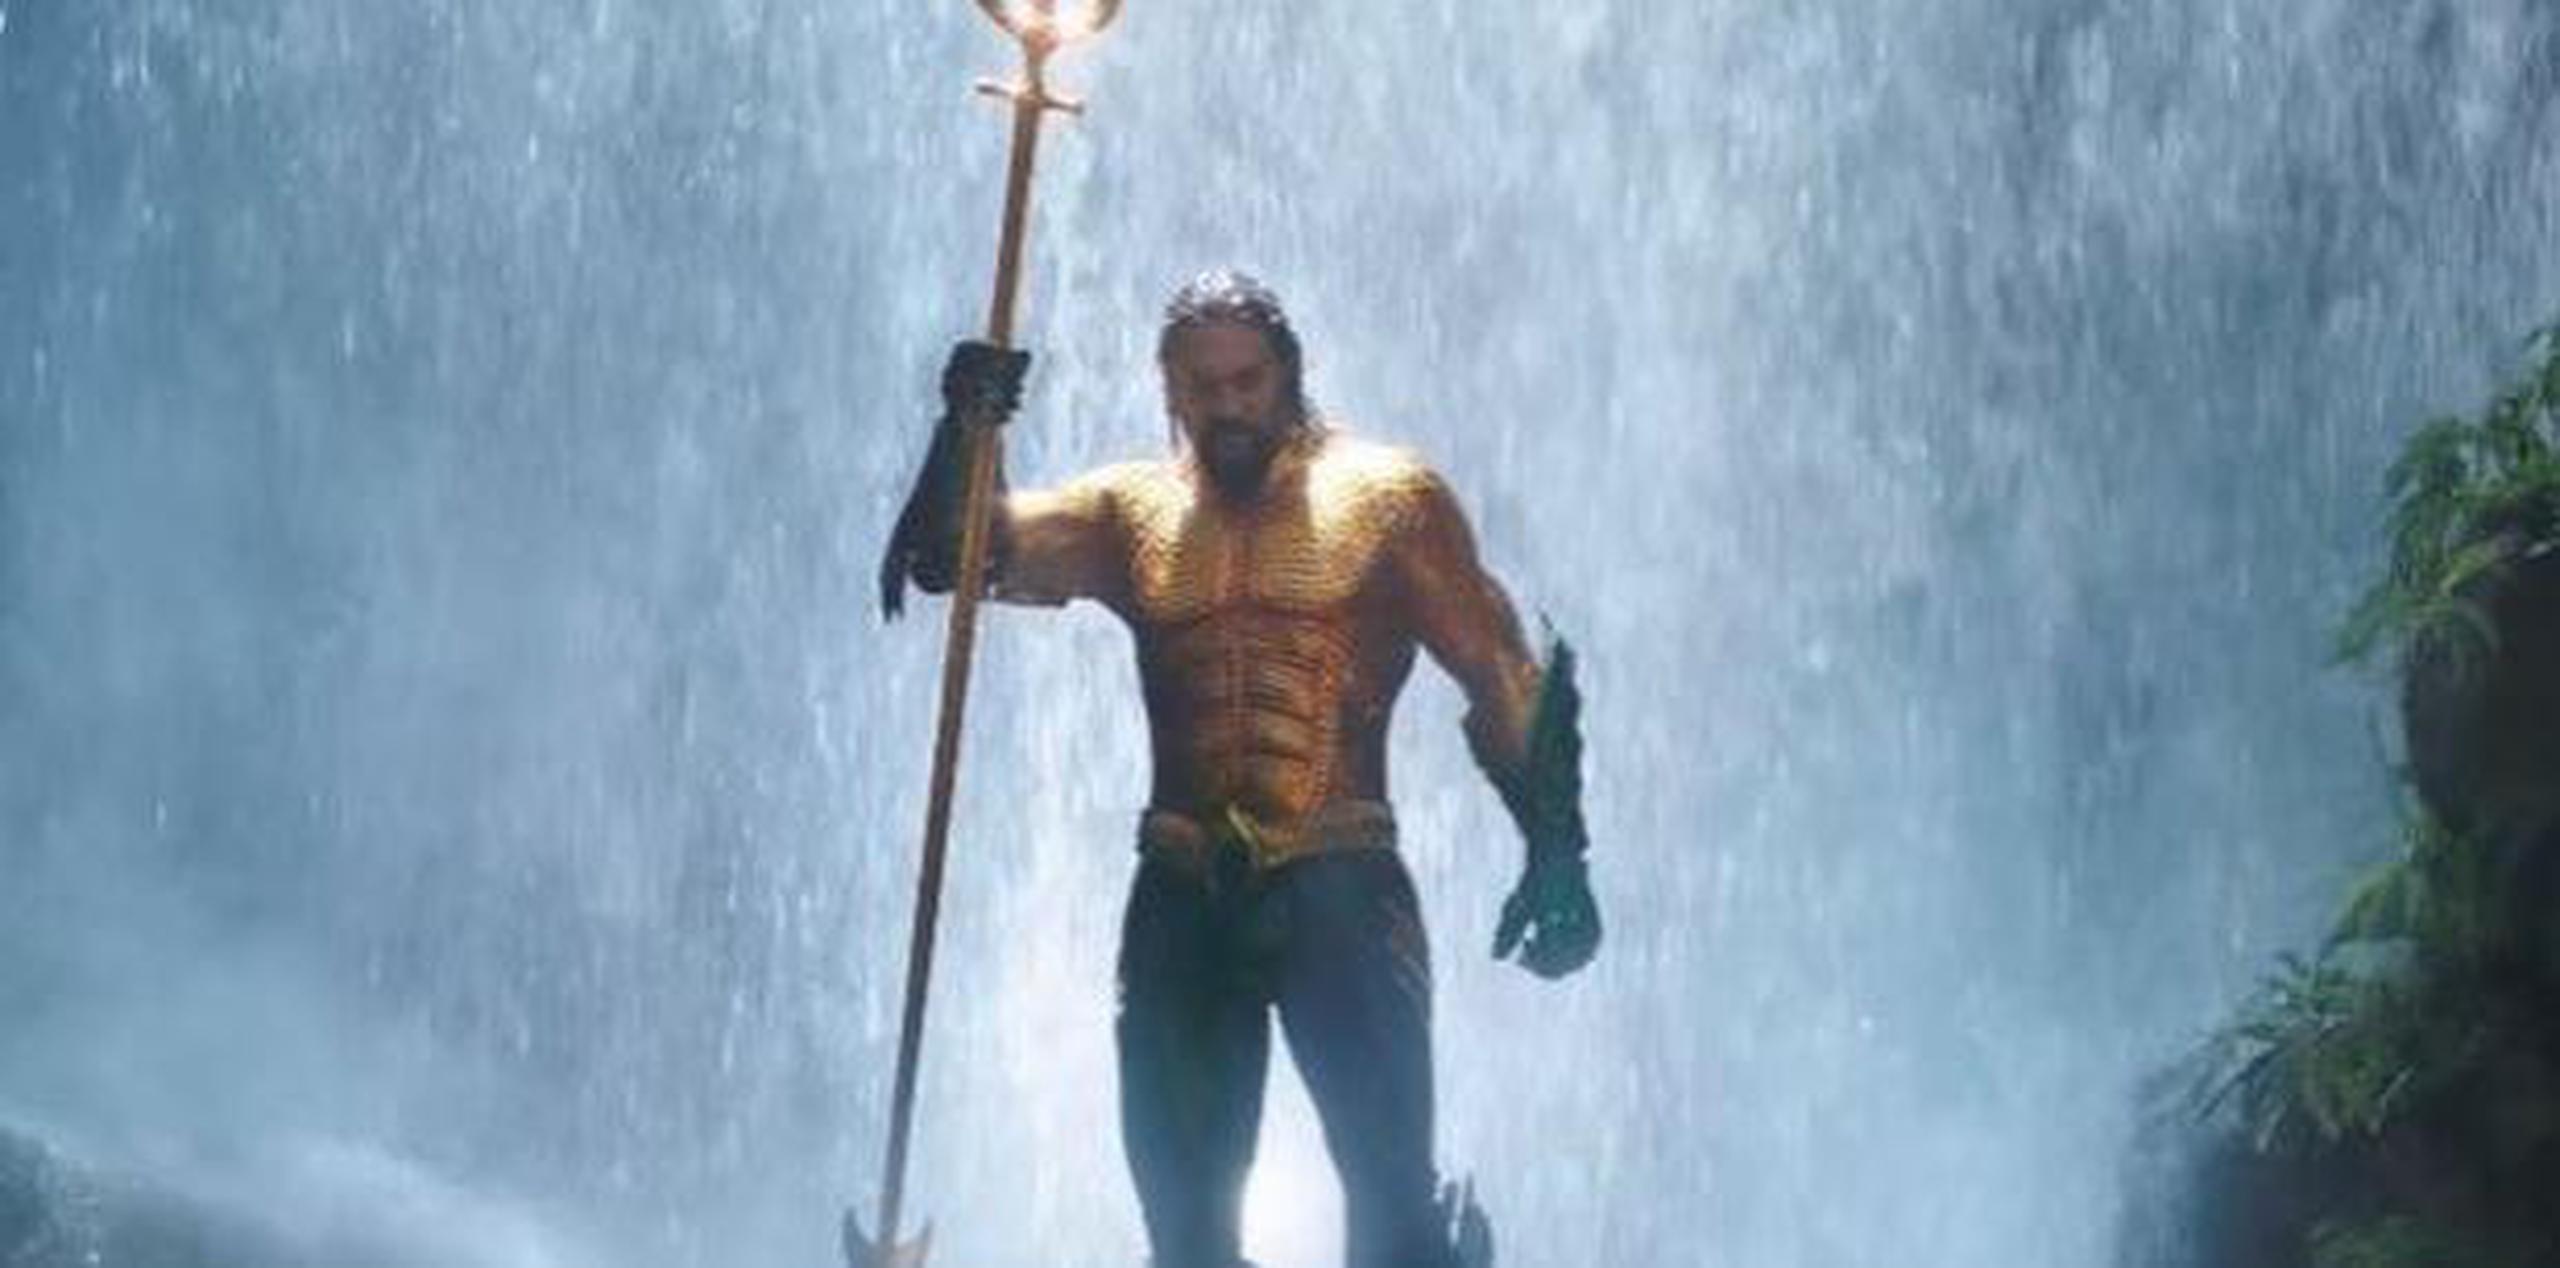 El actor Jason Momoa es el encargado de dar vida a “Aquaman”.  (Captura)